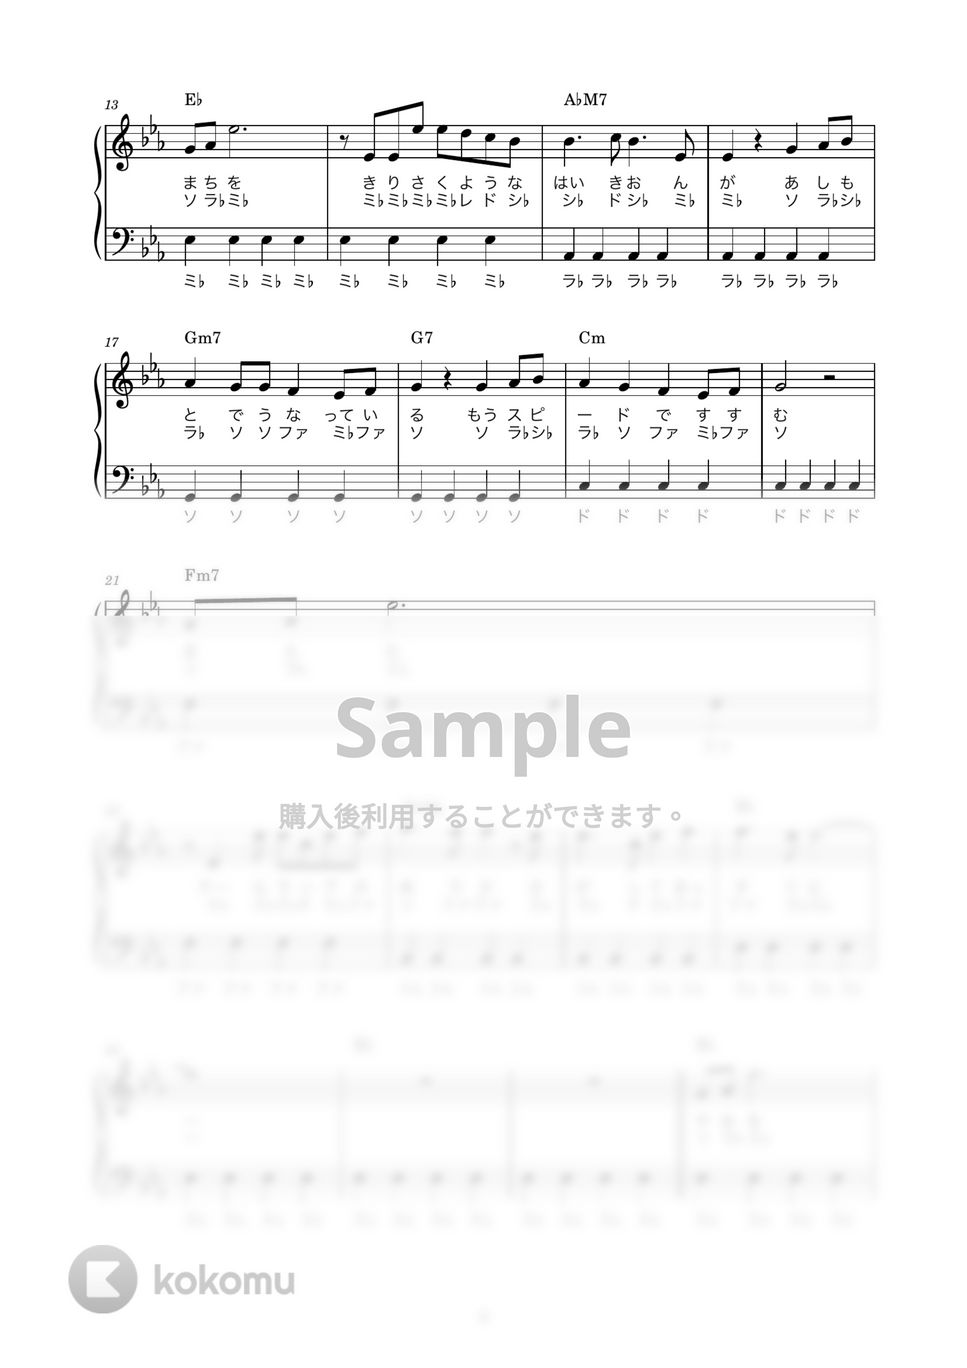 Official髭男dism - ホワイトノイズ (かんたん / 歌詞付き / ドレミ付き / 初心者) by piano.tokyo